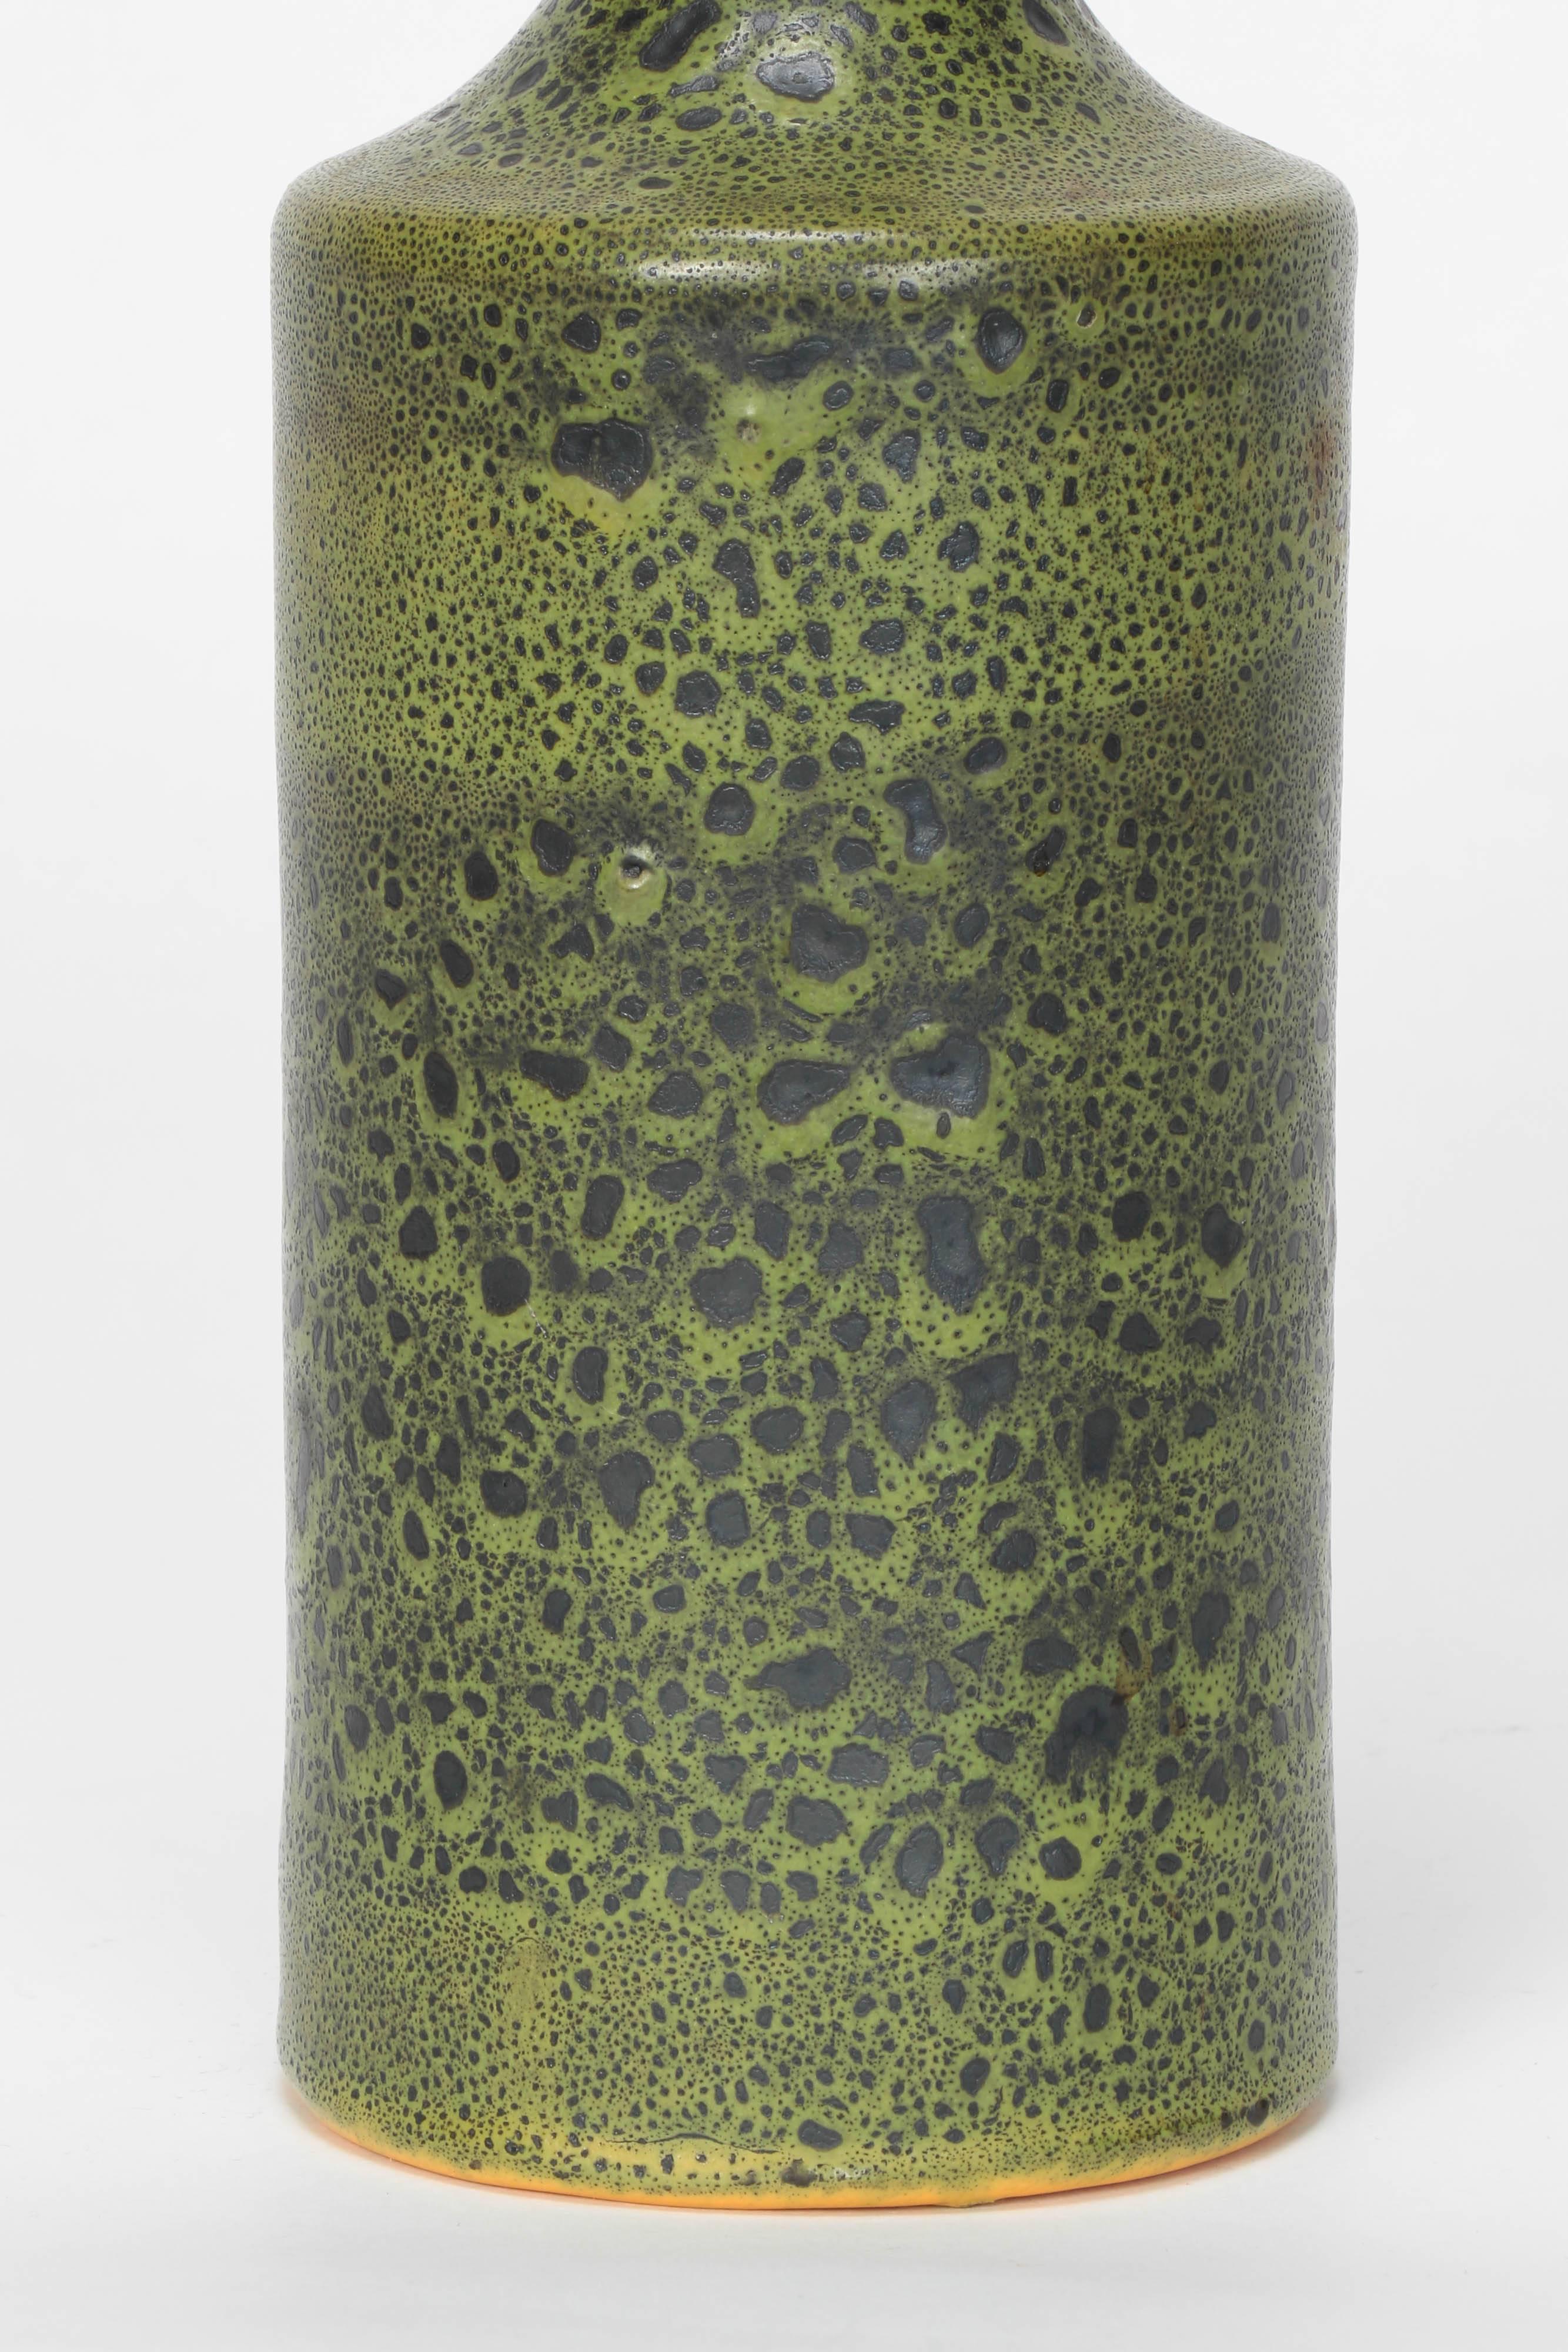 Swiss André Freymond Signed Ceramic Vase in Yellow and Green Glaze, 1950s